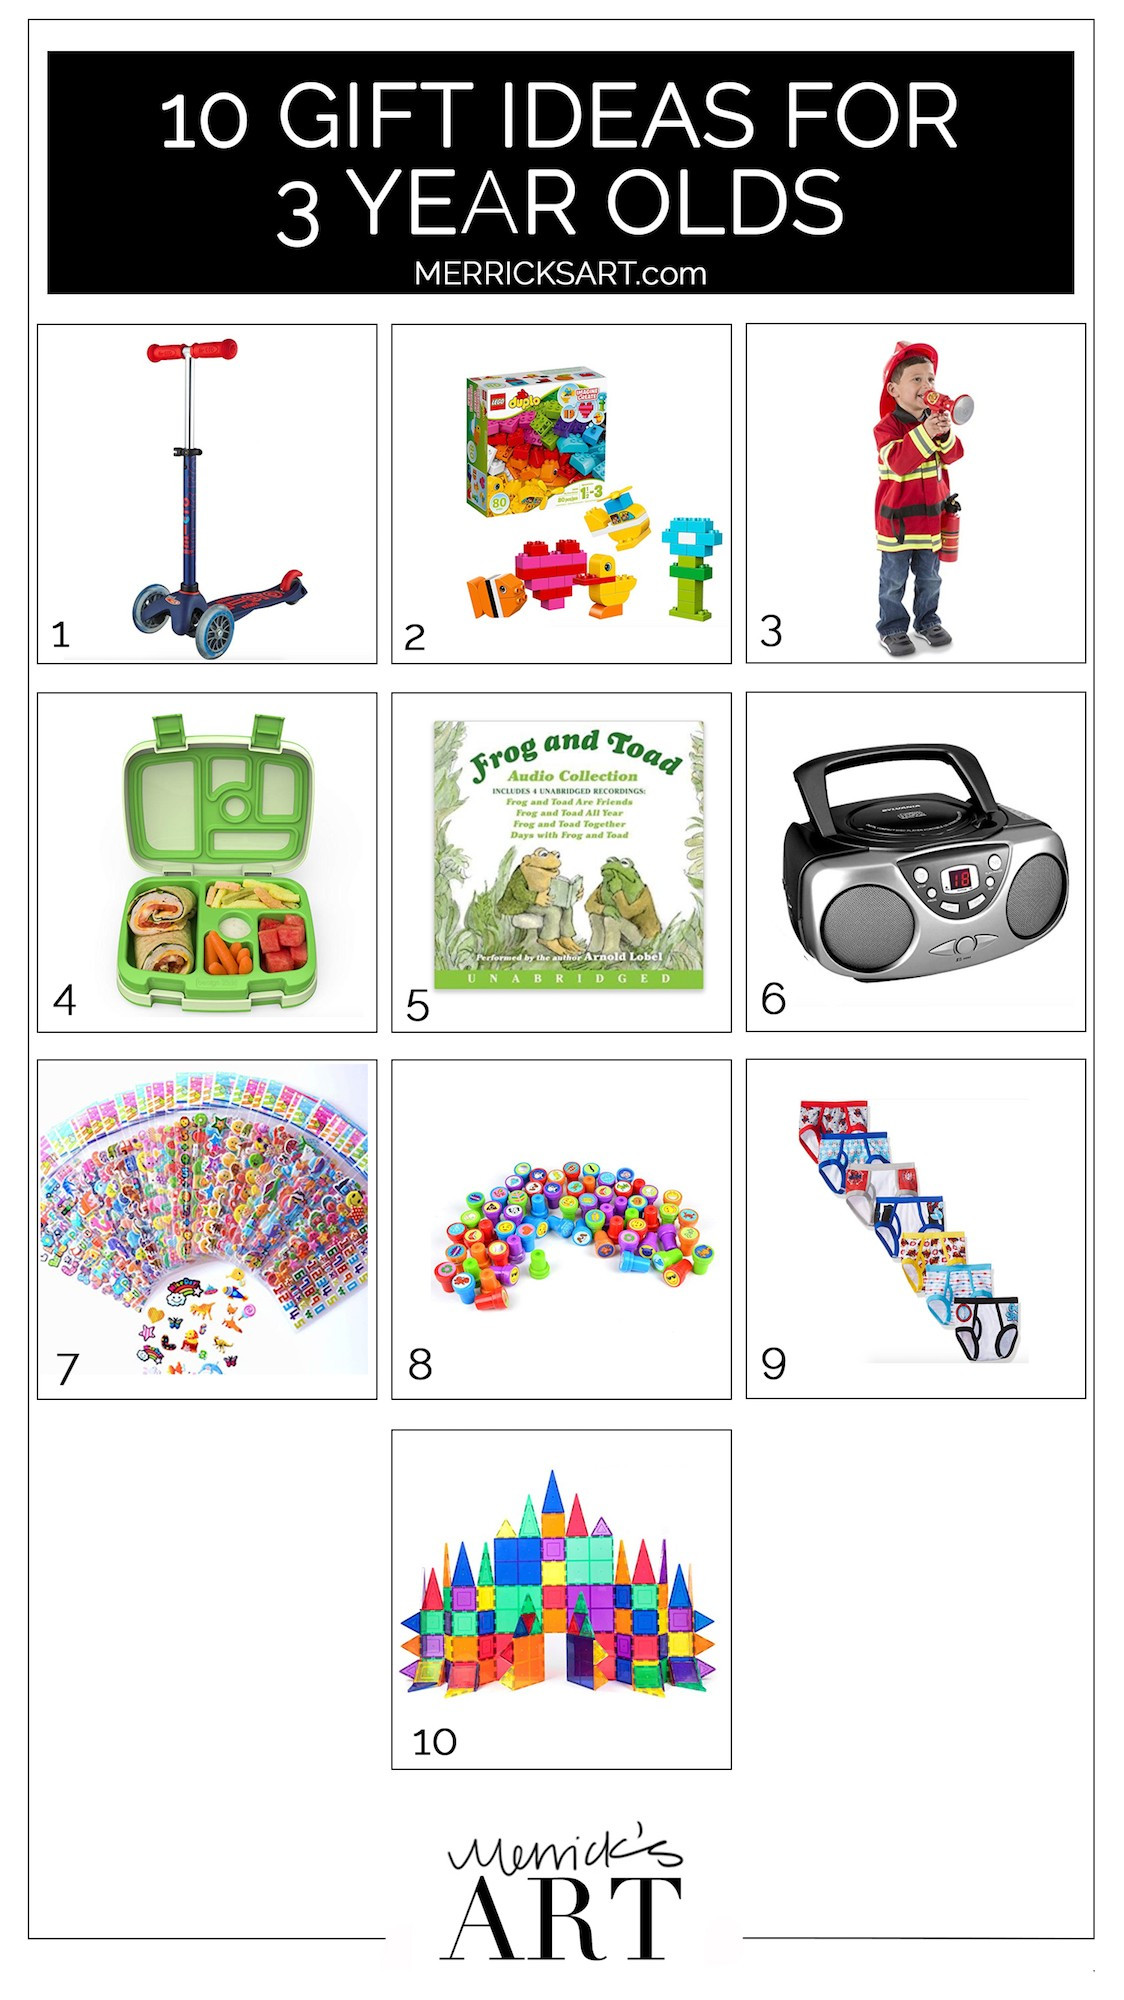 3 Year Old Boy Birthday Gifts
 10 Birthday Gift Ideas for a 3 Year Old Boy